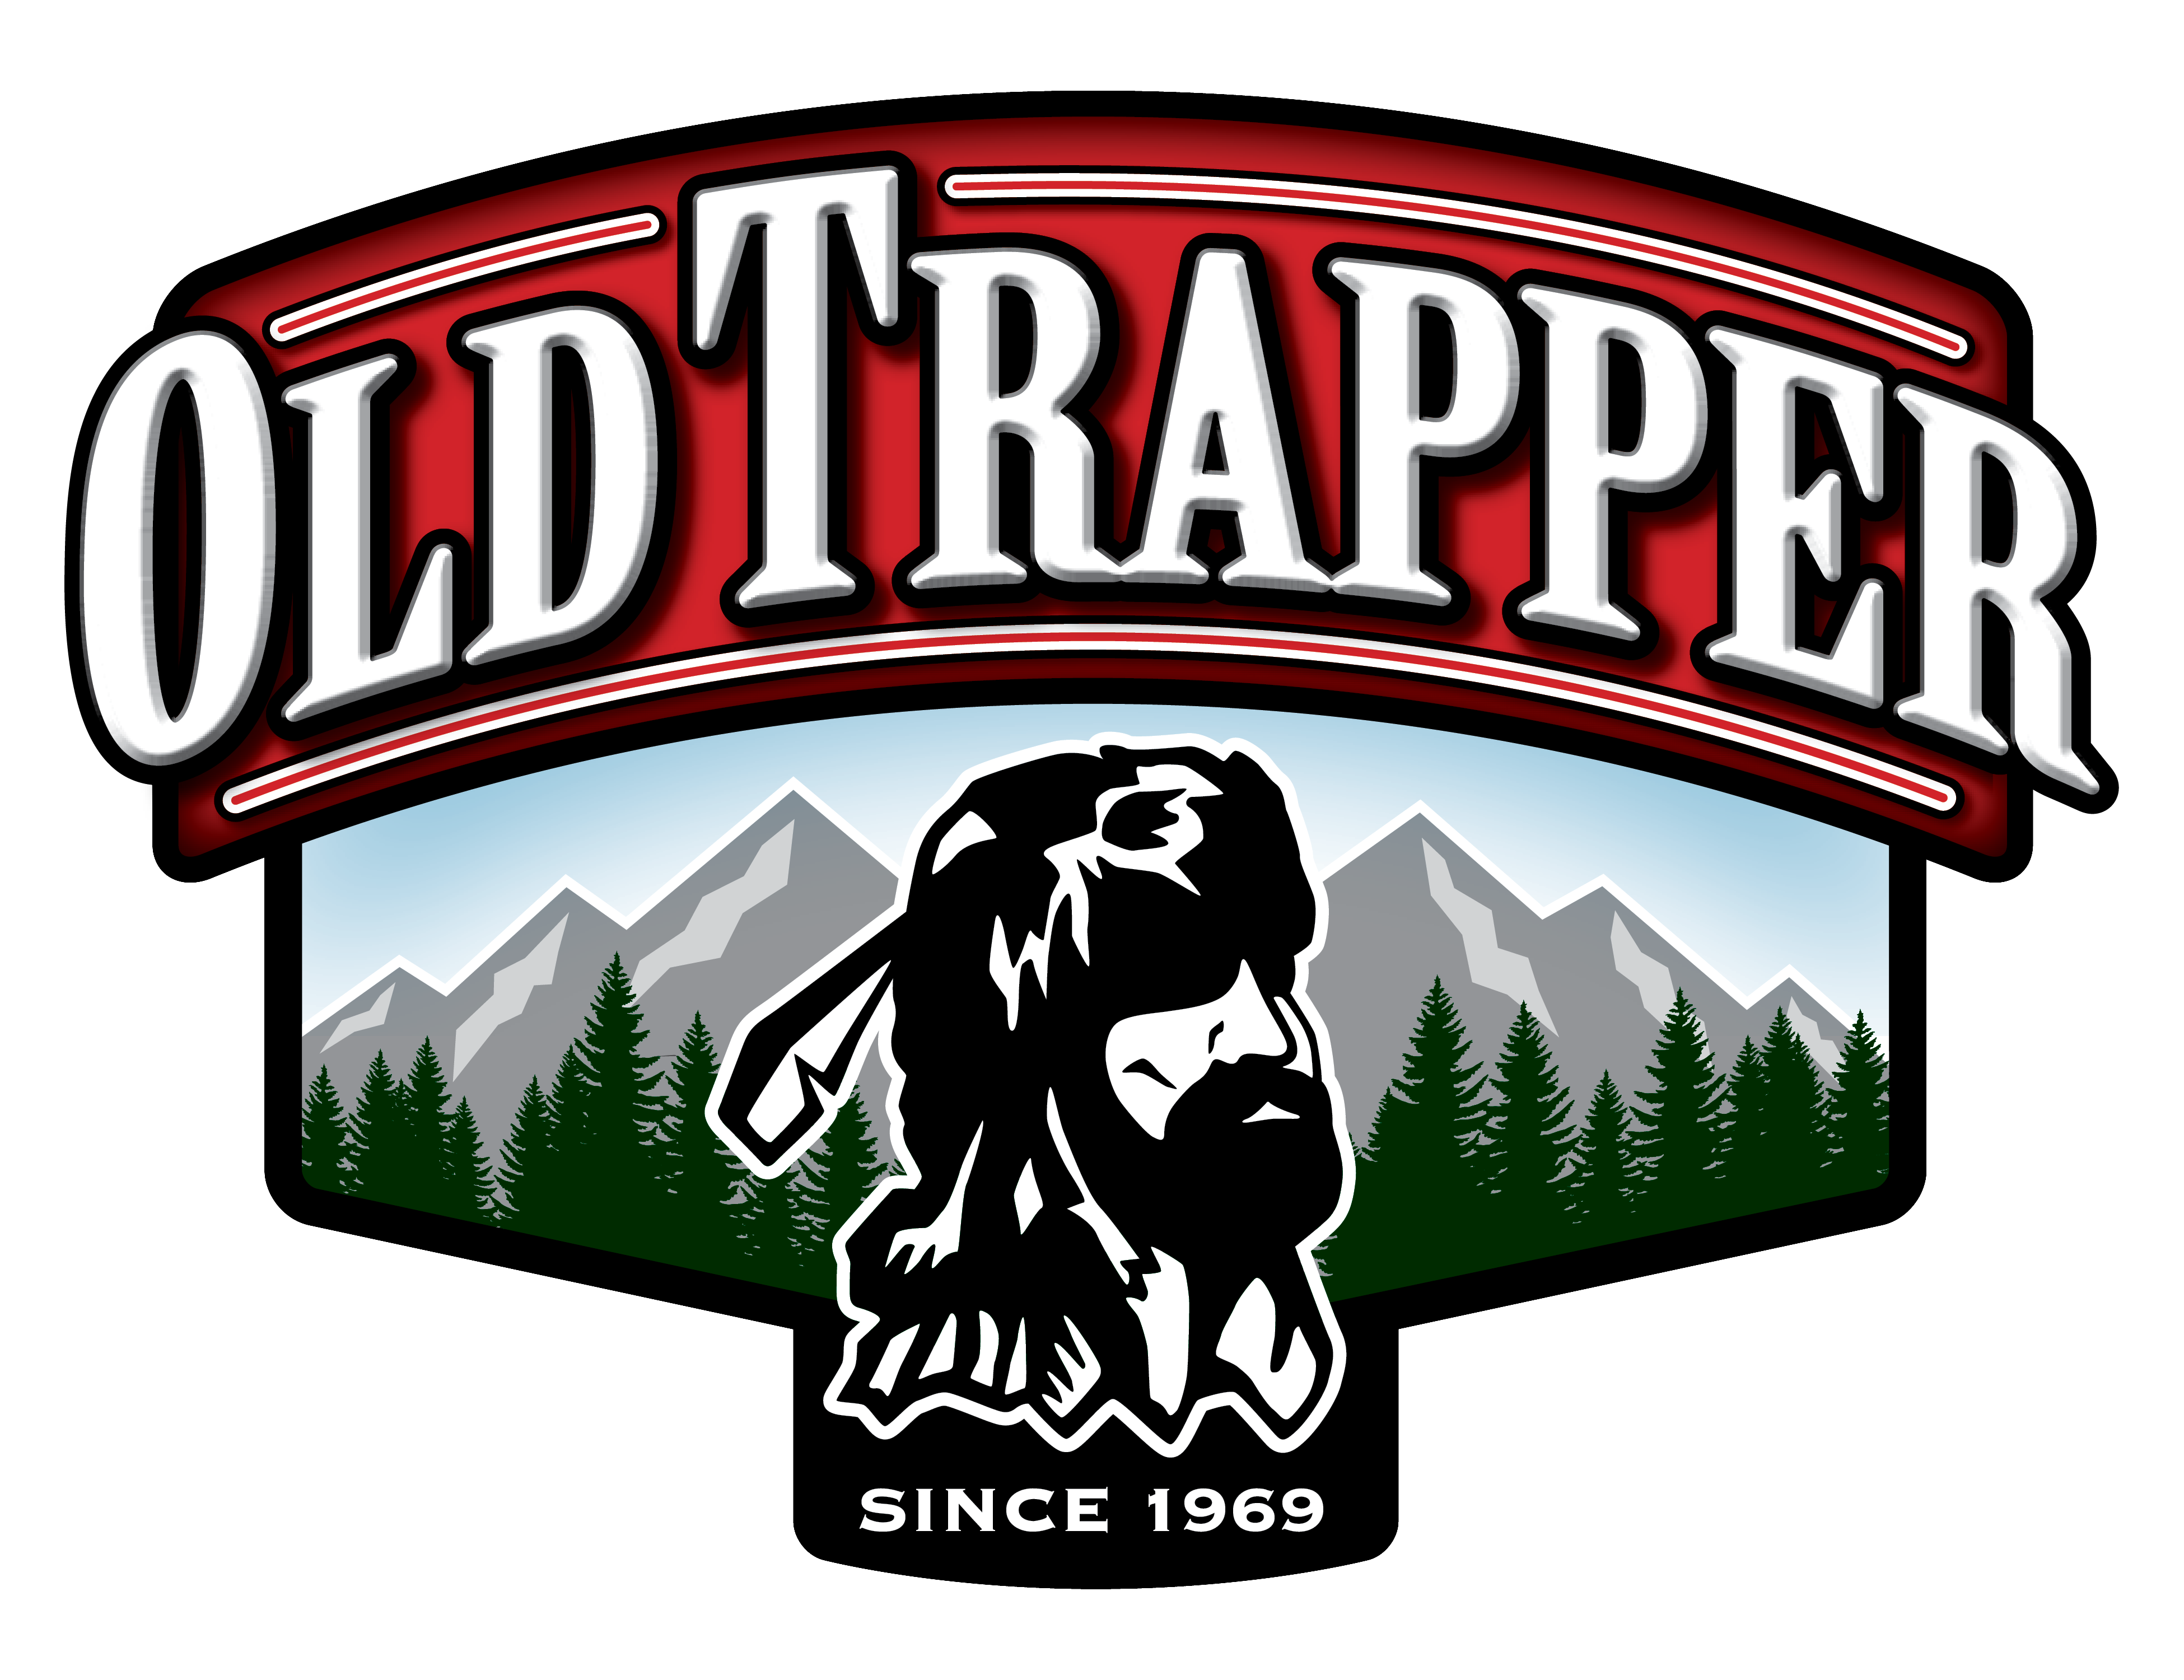 Brand old trapper